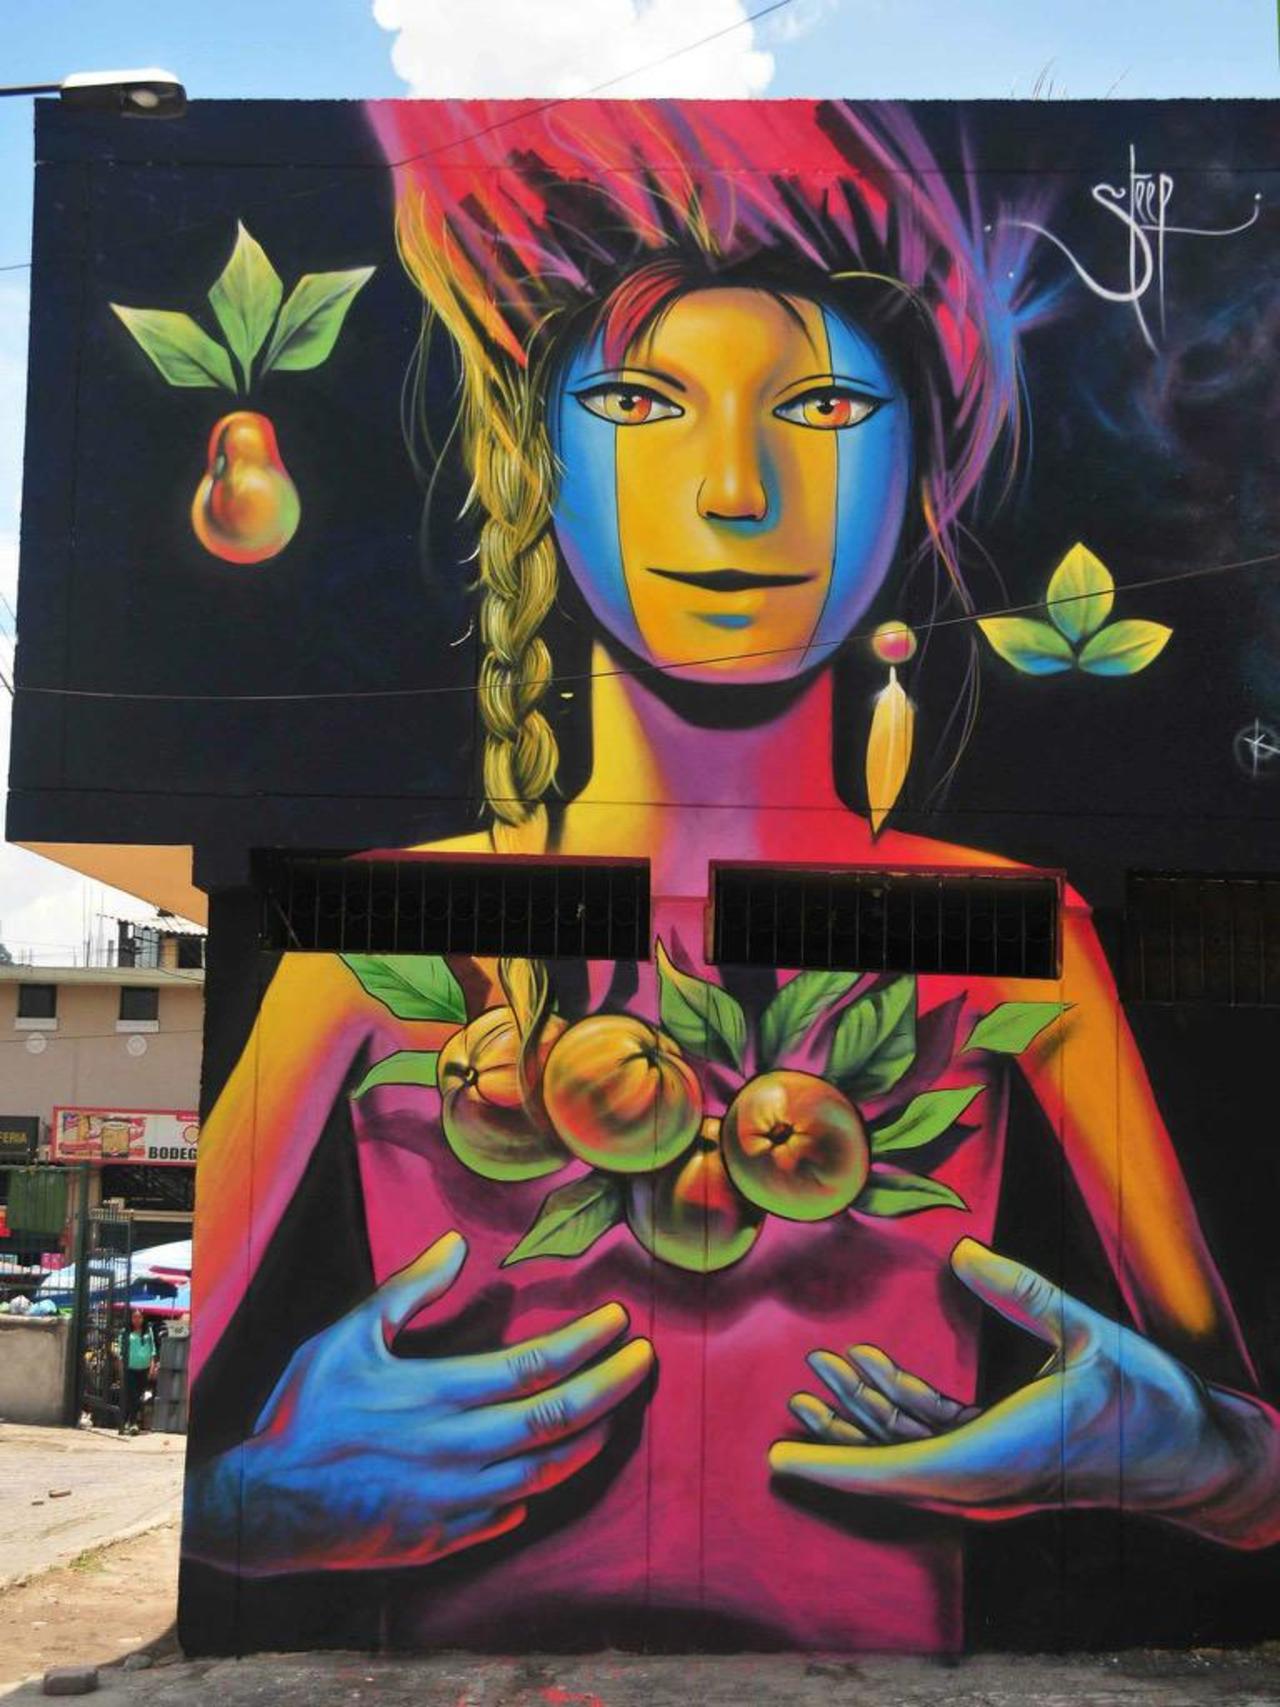 RT @GoogleStreetArt: Street Art by Steep

#art #graffiti #mural #streetart http://t.co/Hb8vHB2yqL